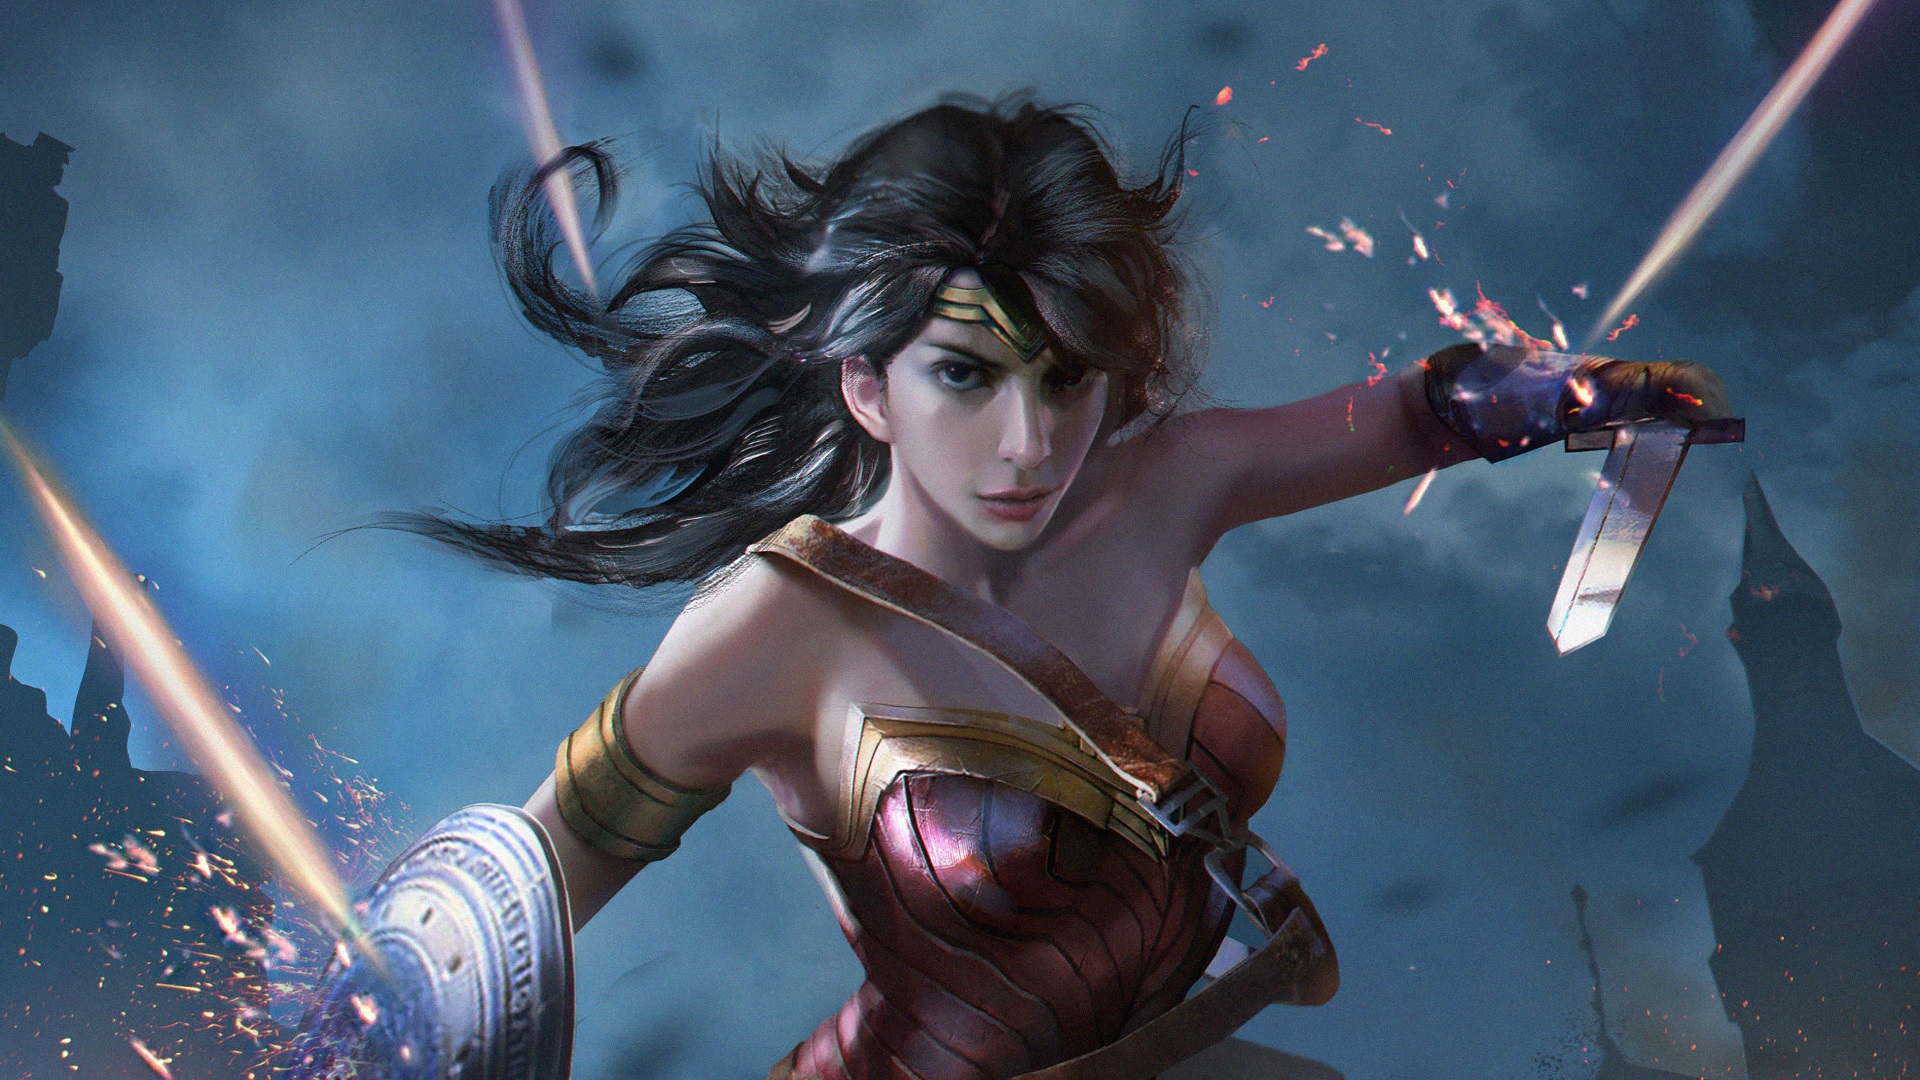 General 1920x1080 artwork digital art Wonder Woman DC Comics women brunette long hair shield sword